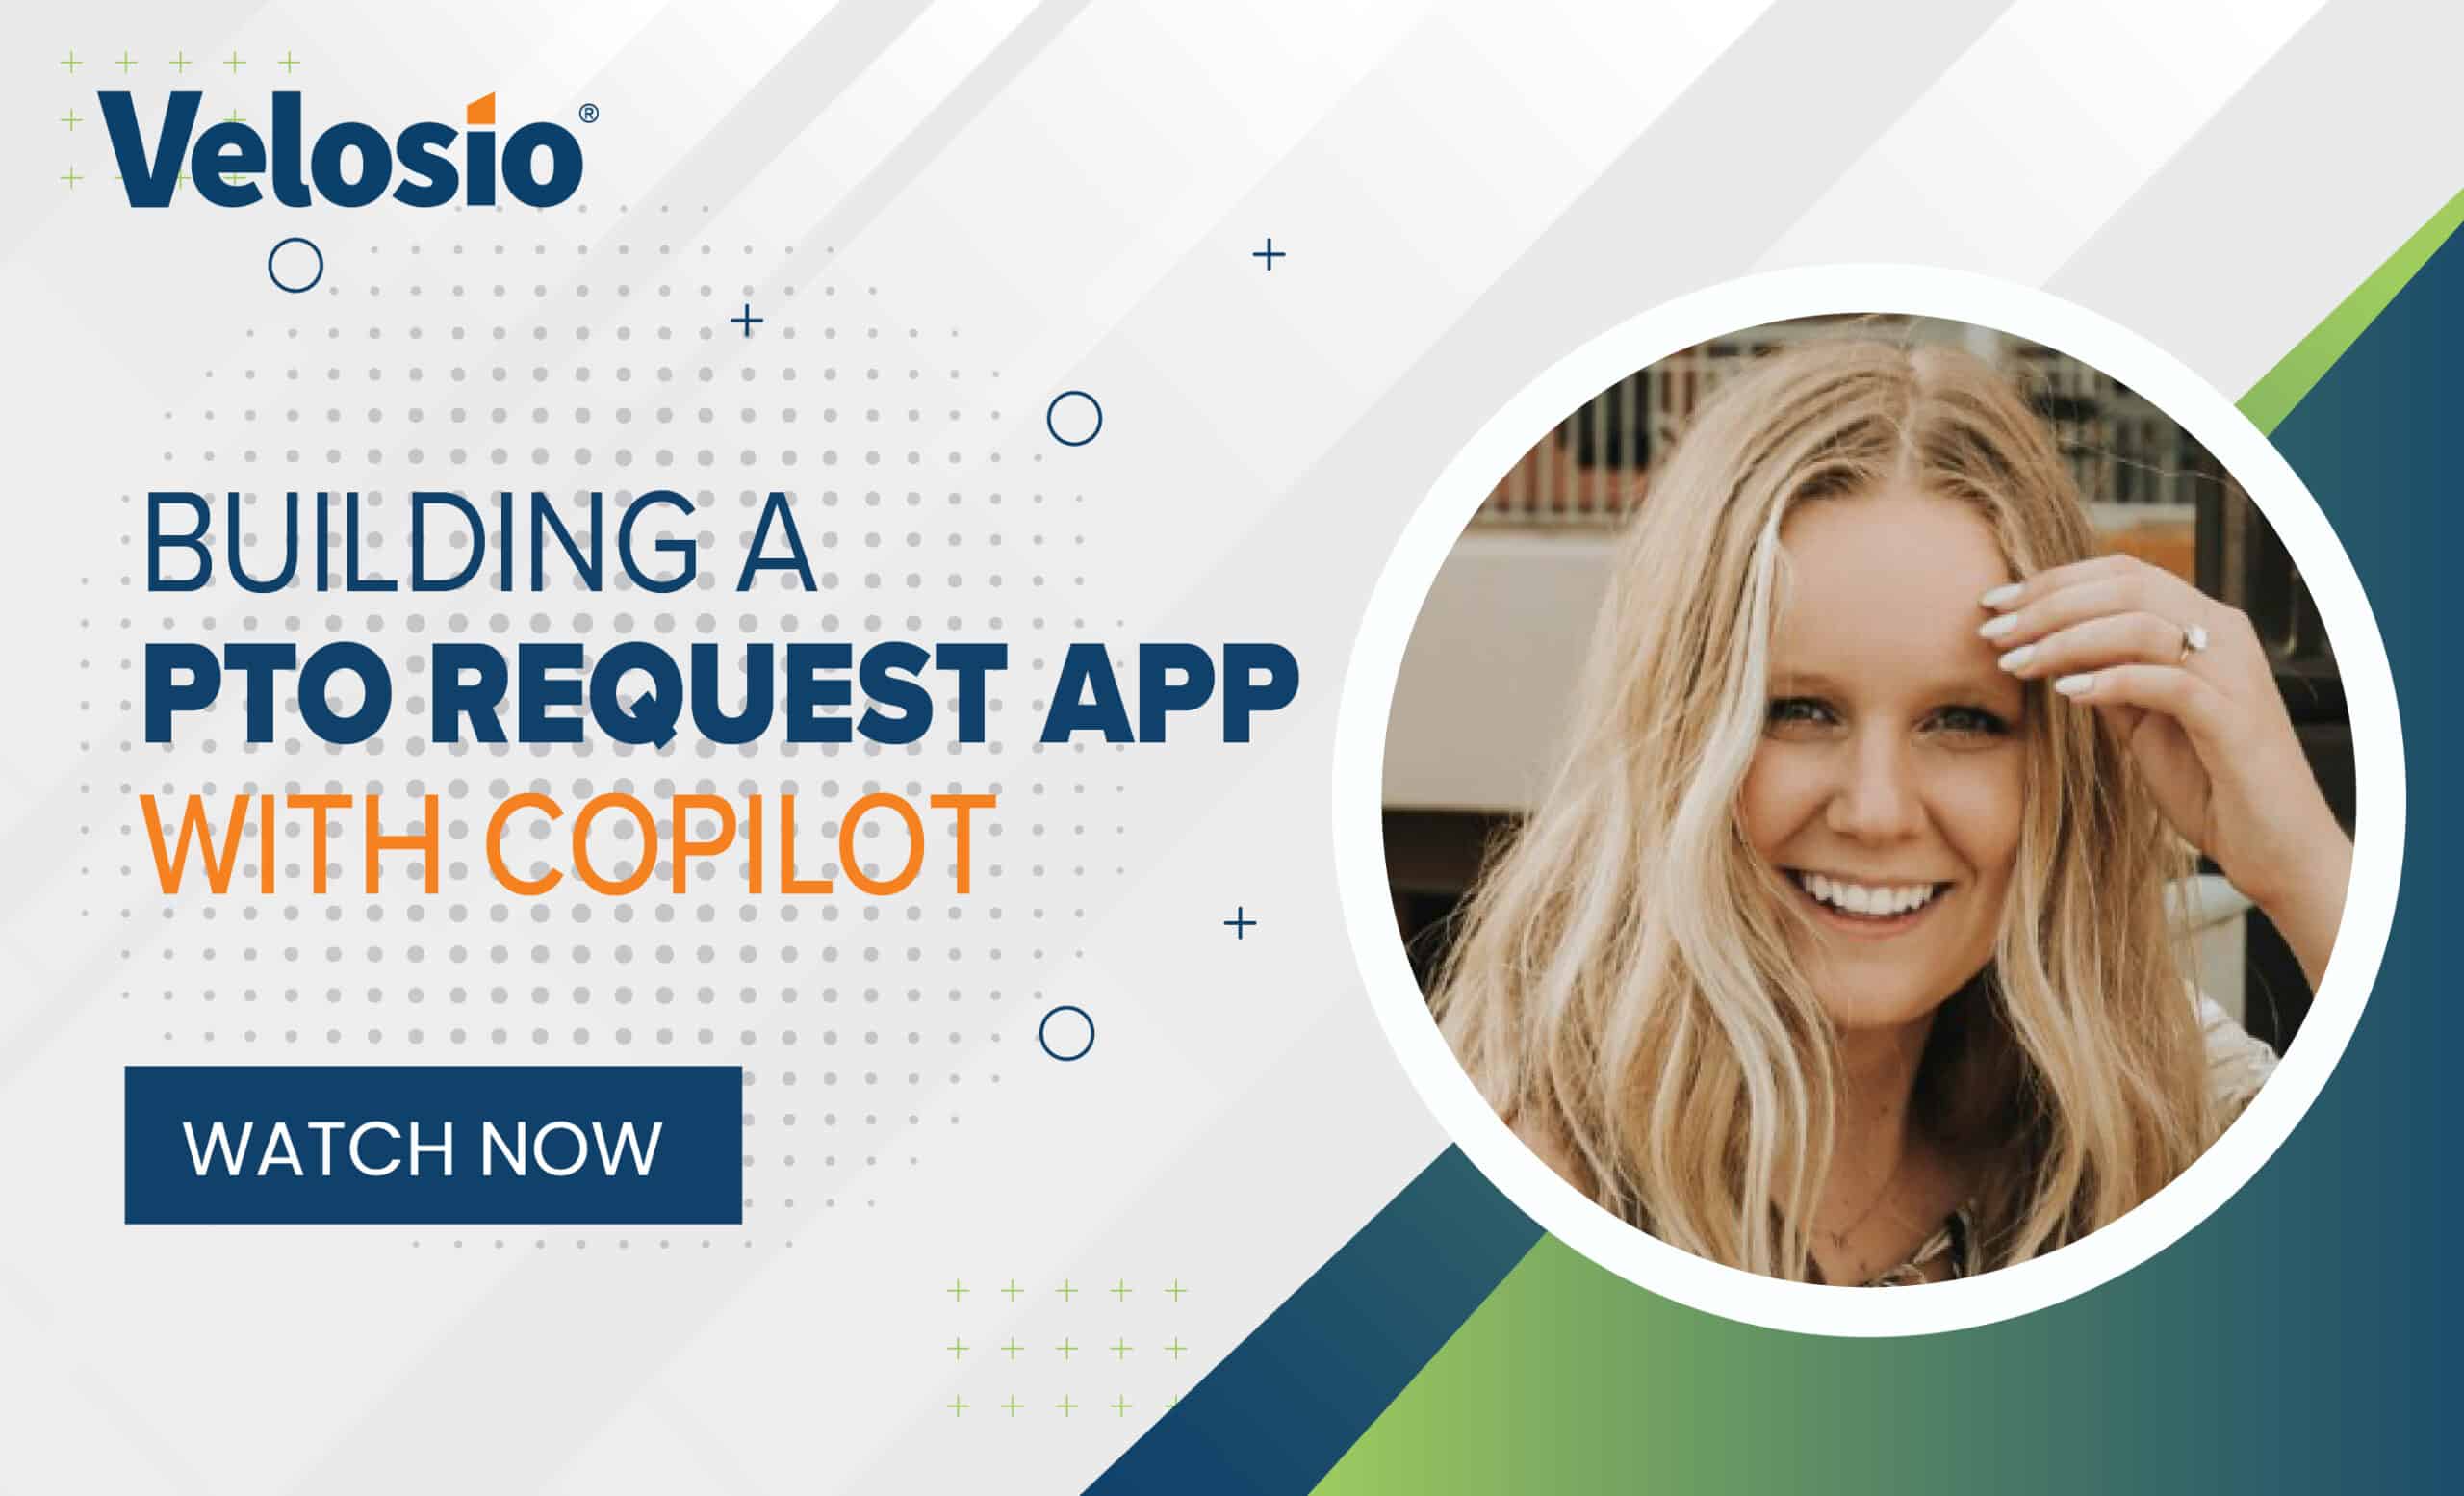 Building a PTO Request App with Copilot